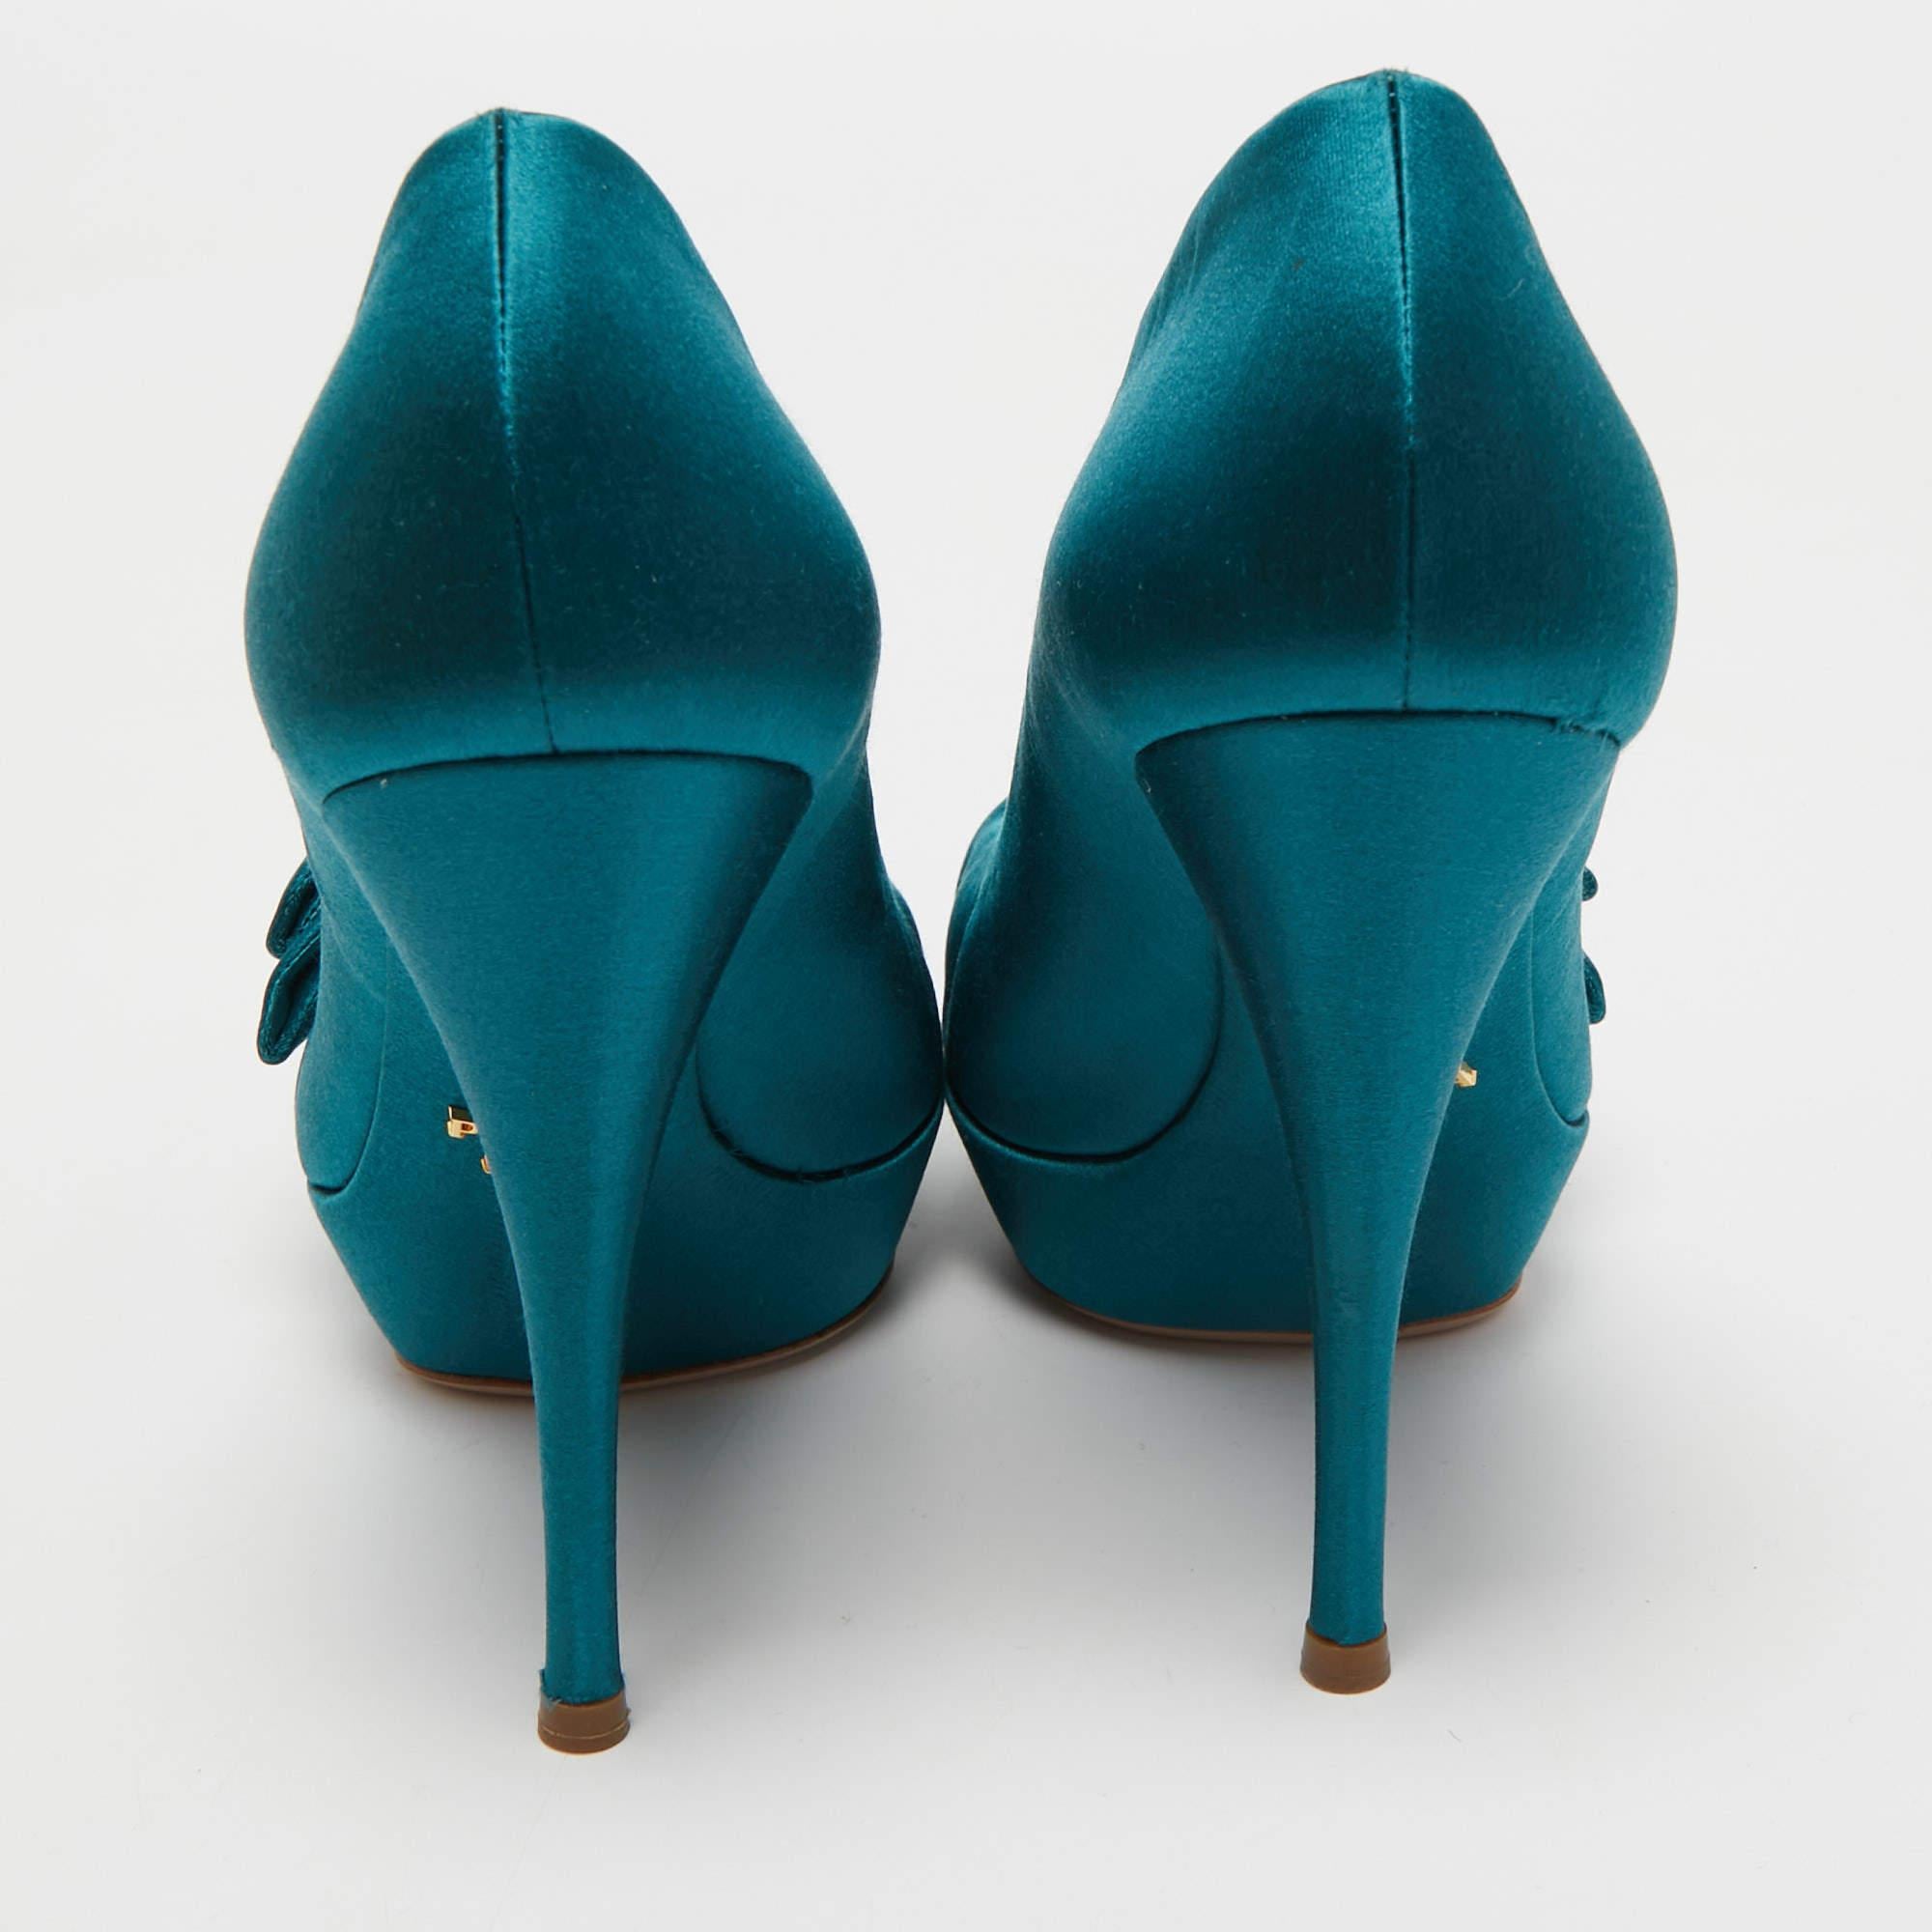 turquoise blue heels